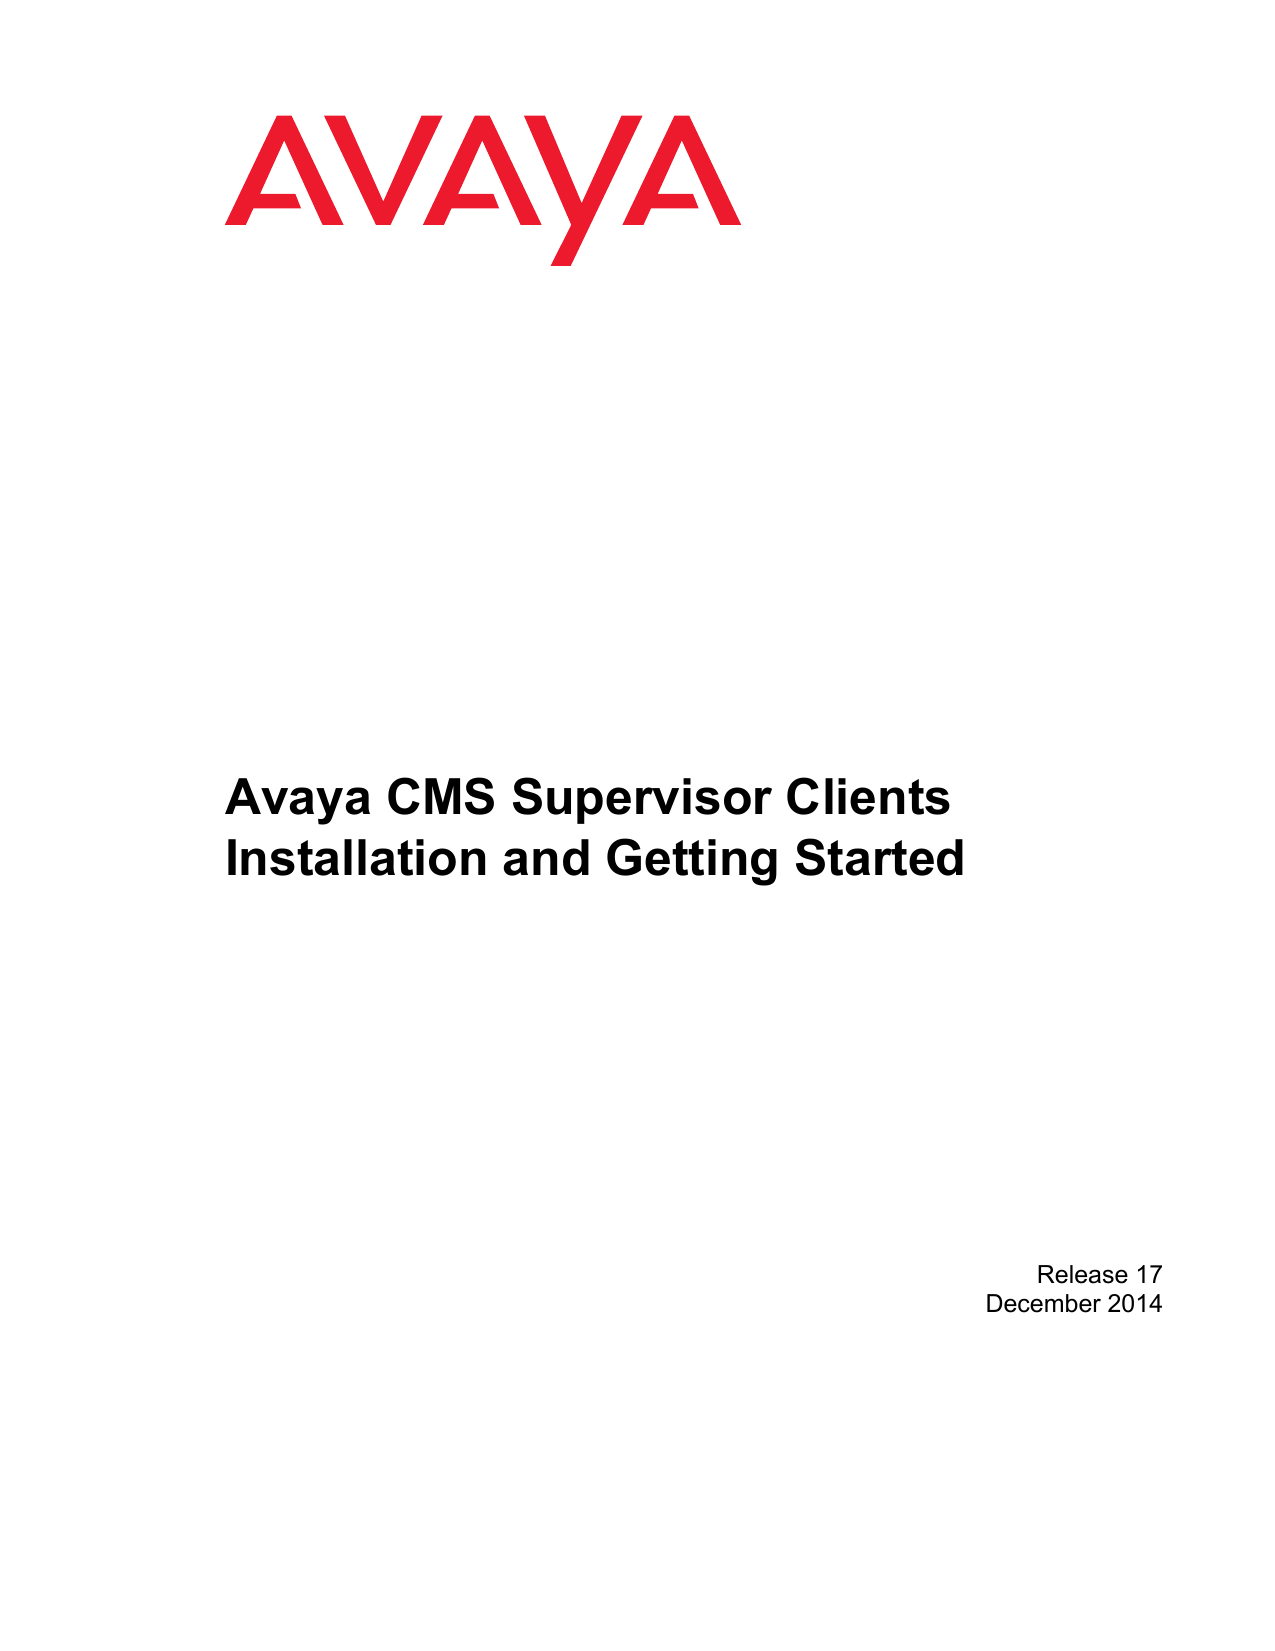 avaya cms supervisor windows 7 64 bit